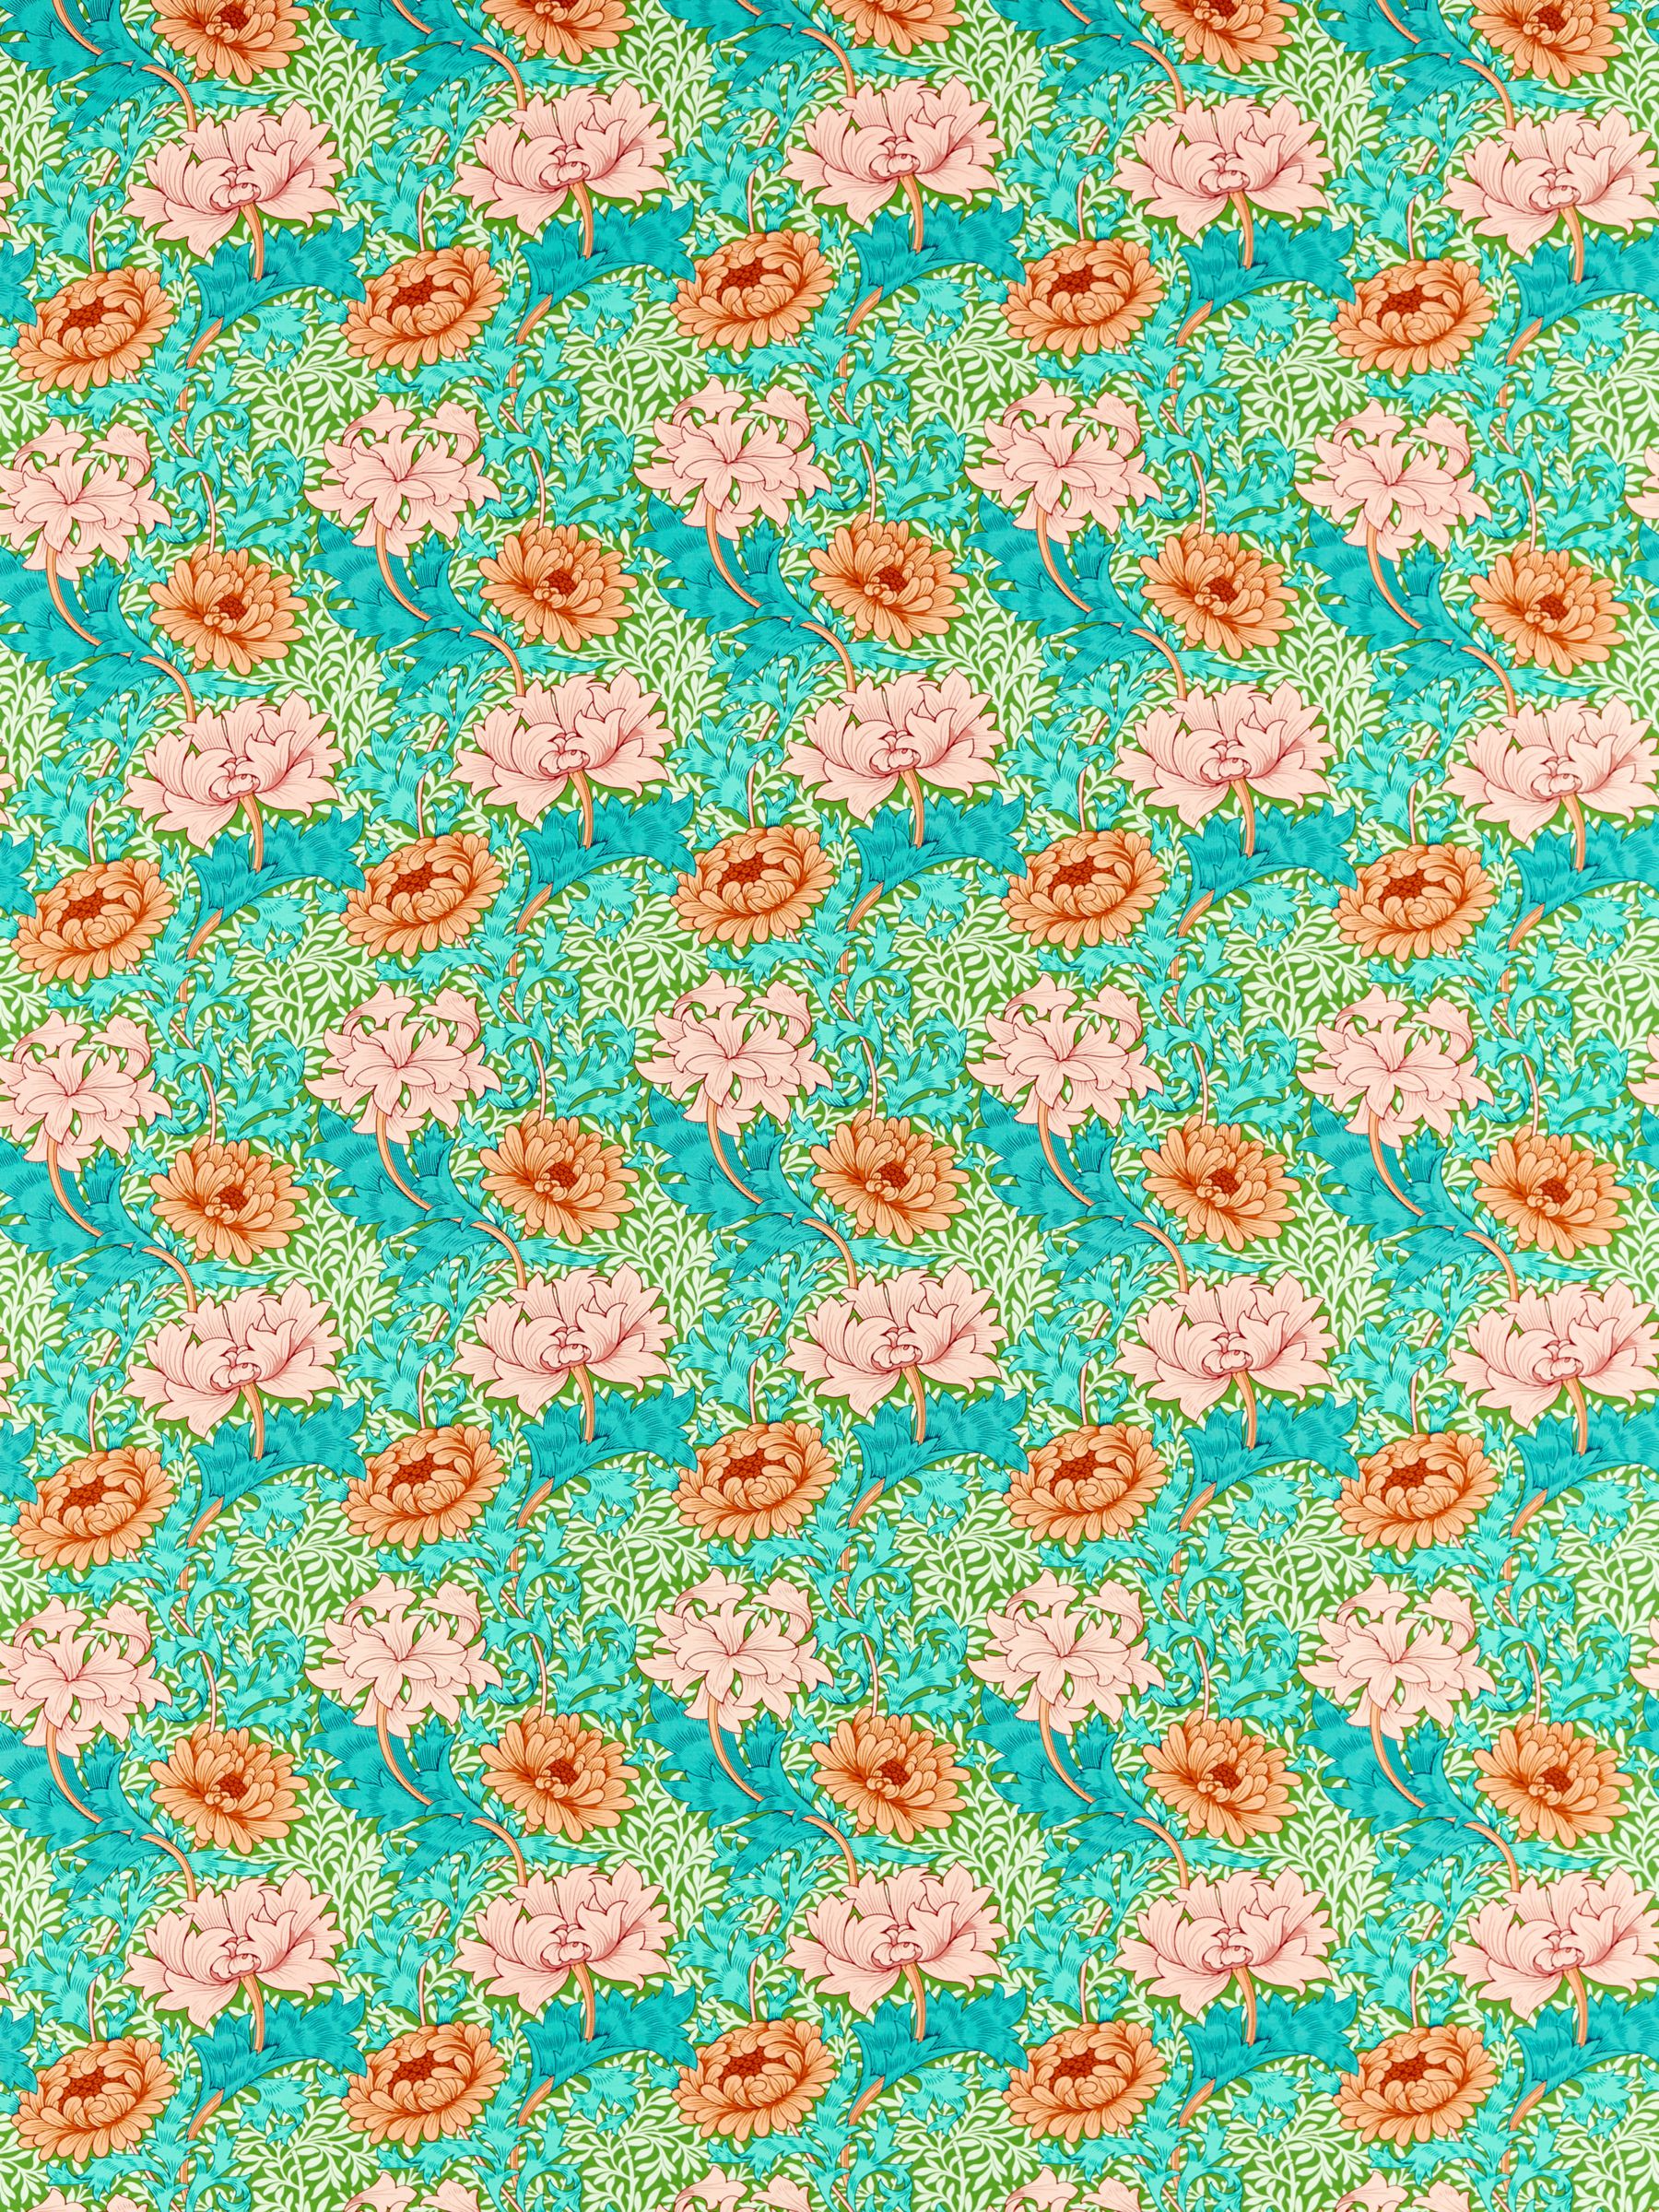 Morris & Co. Chrysanthemum Ben Pentreath Furnishing Fabric, Summer